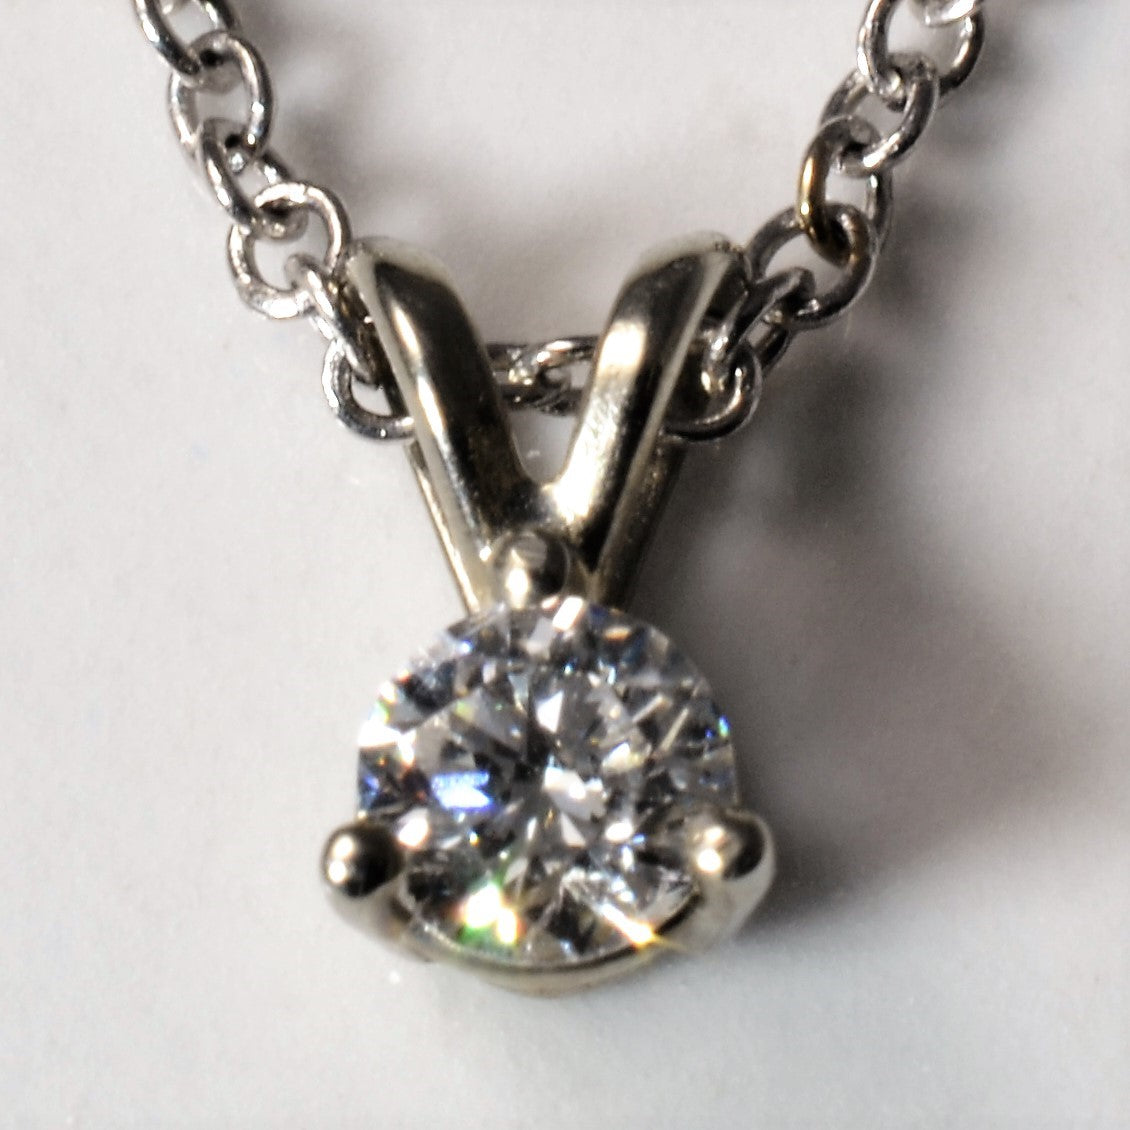 Solitaire Diamond Necklace | 0.15ct | 16